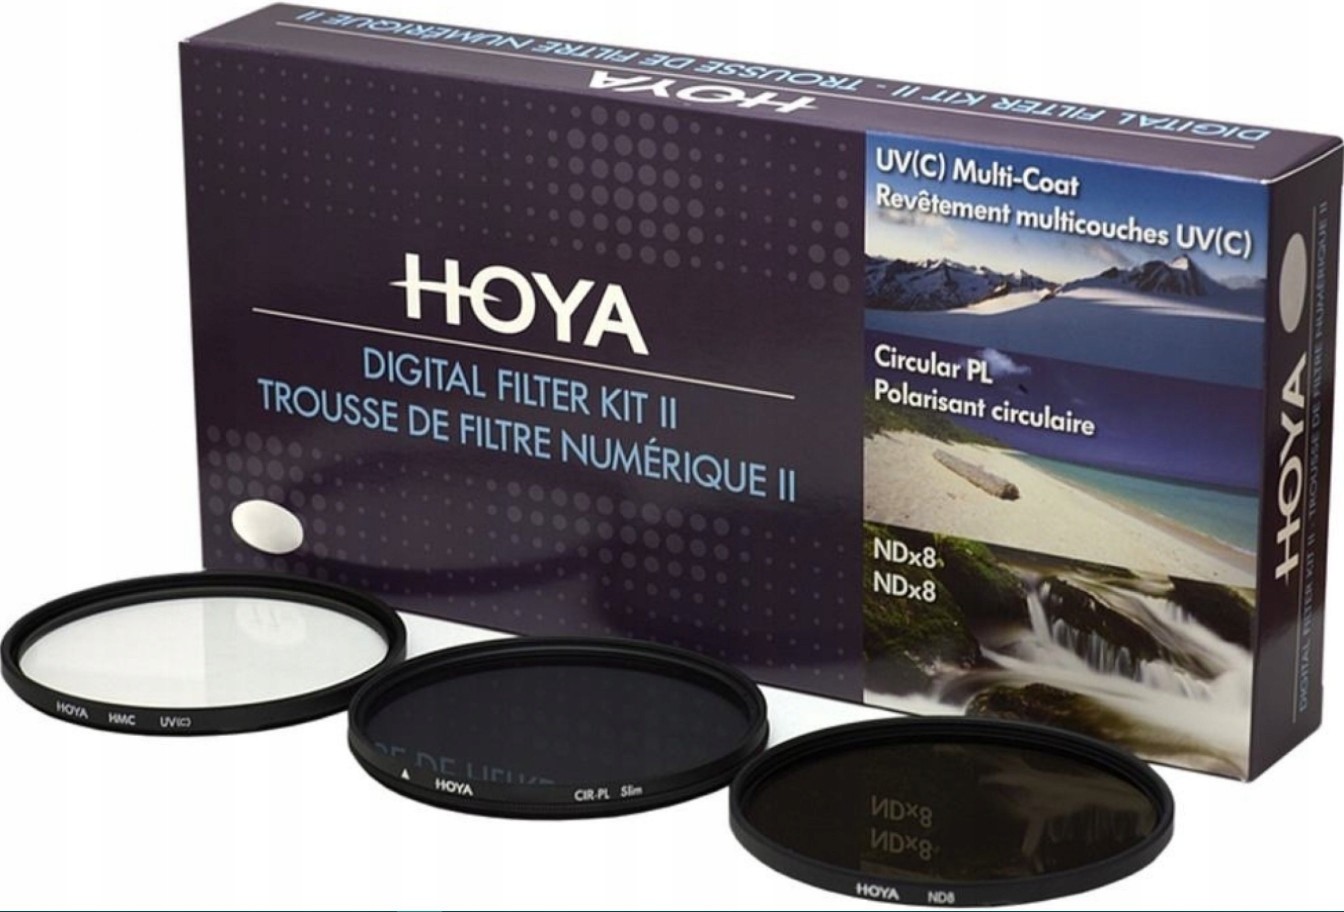 Hoya digital filtr kit II 62mm